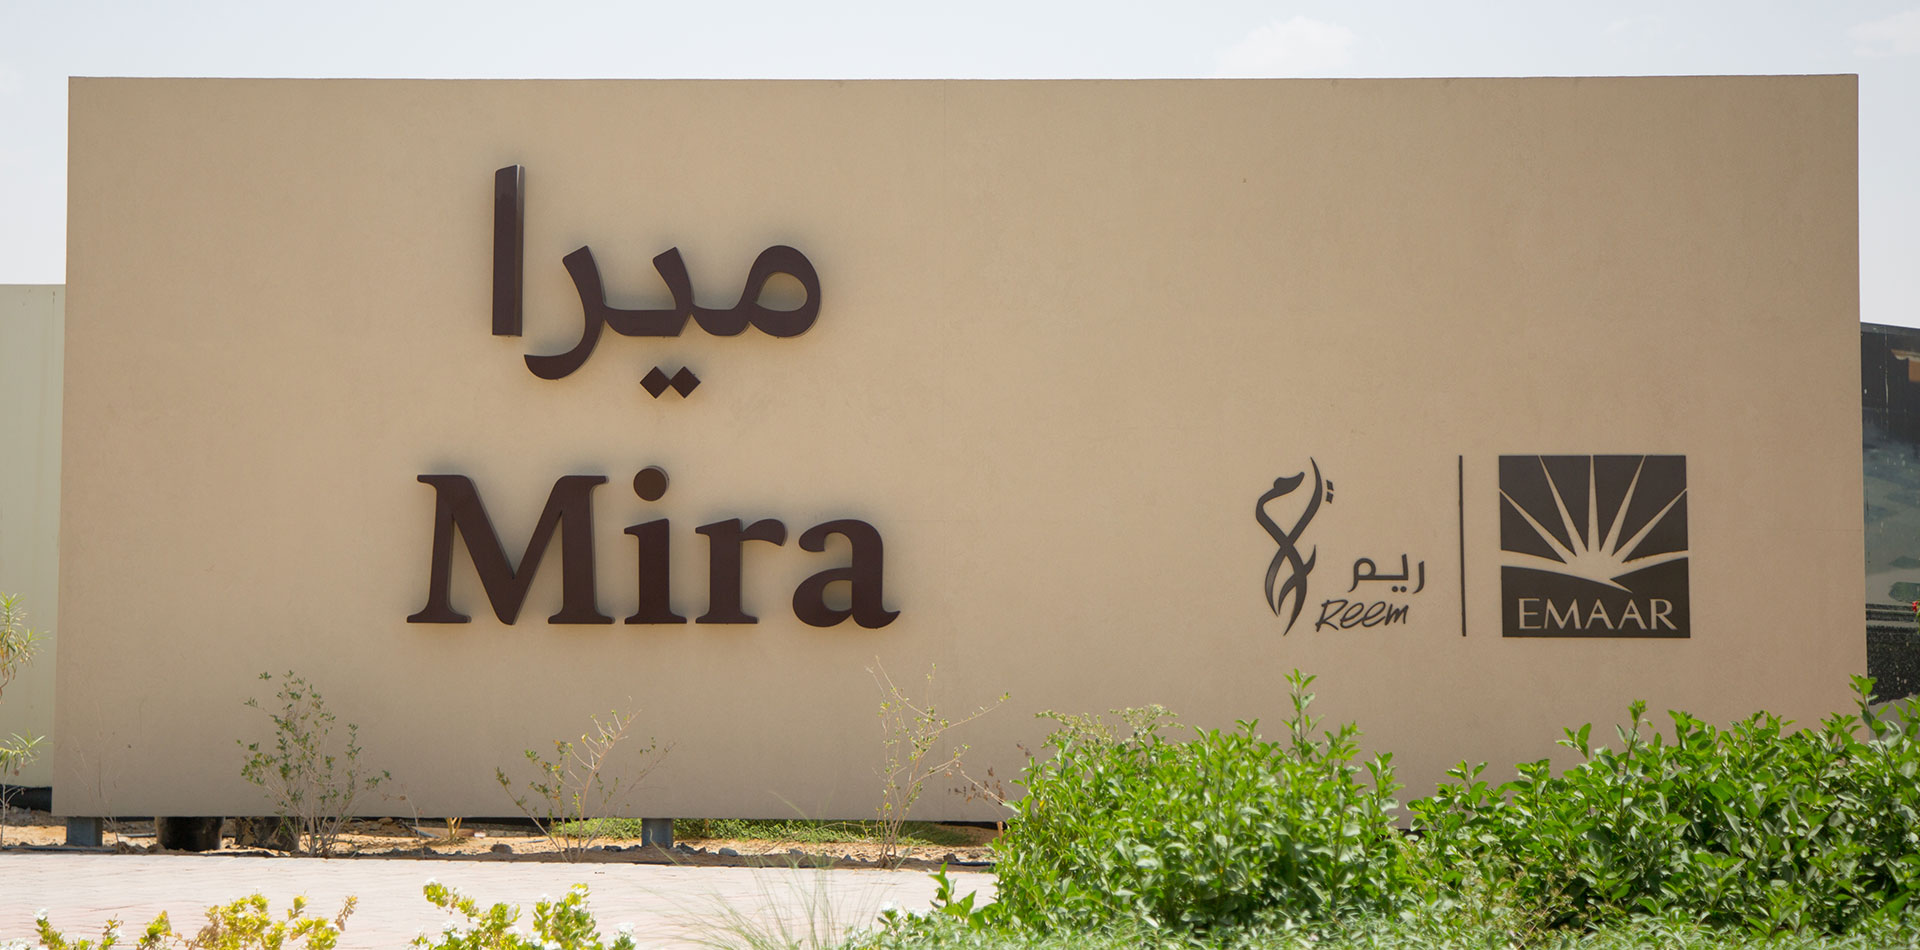 Monument Signage of Mira